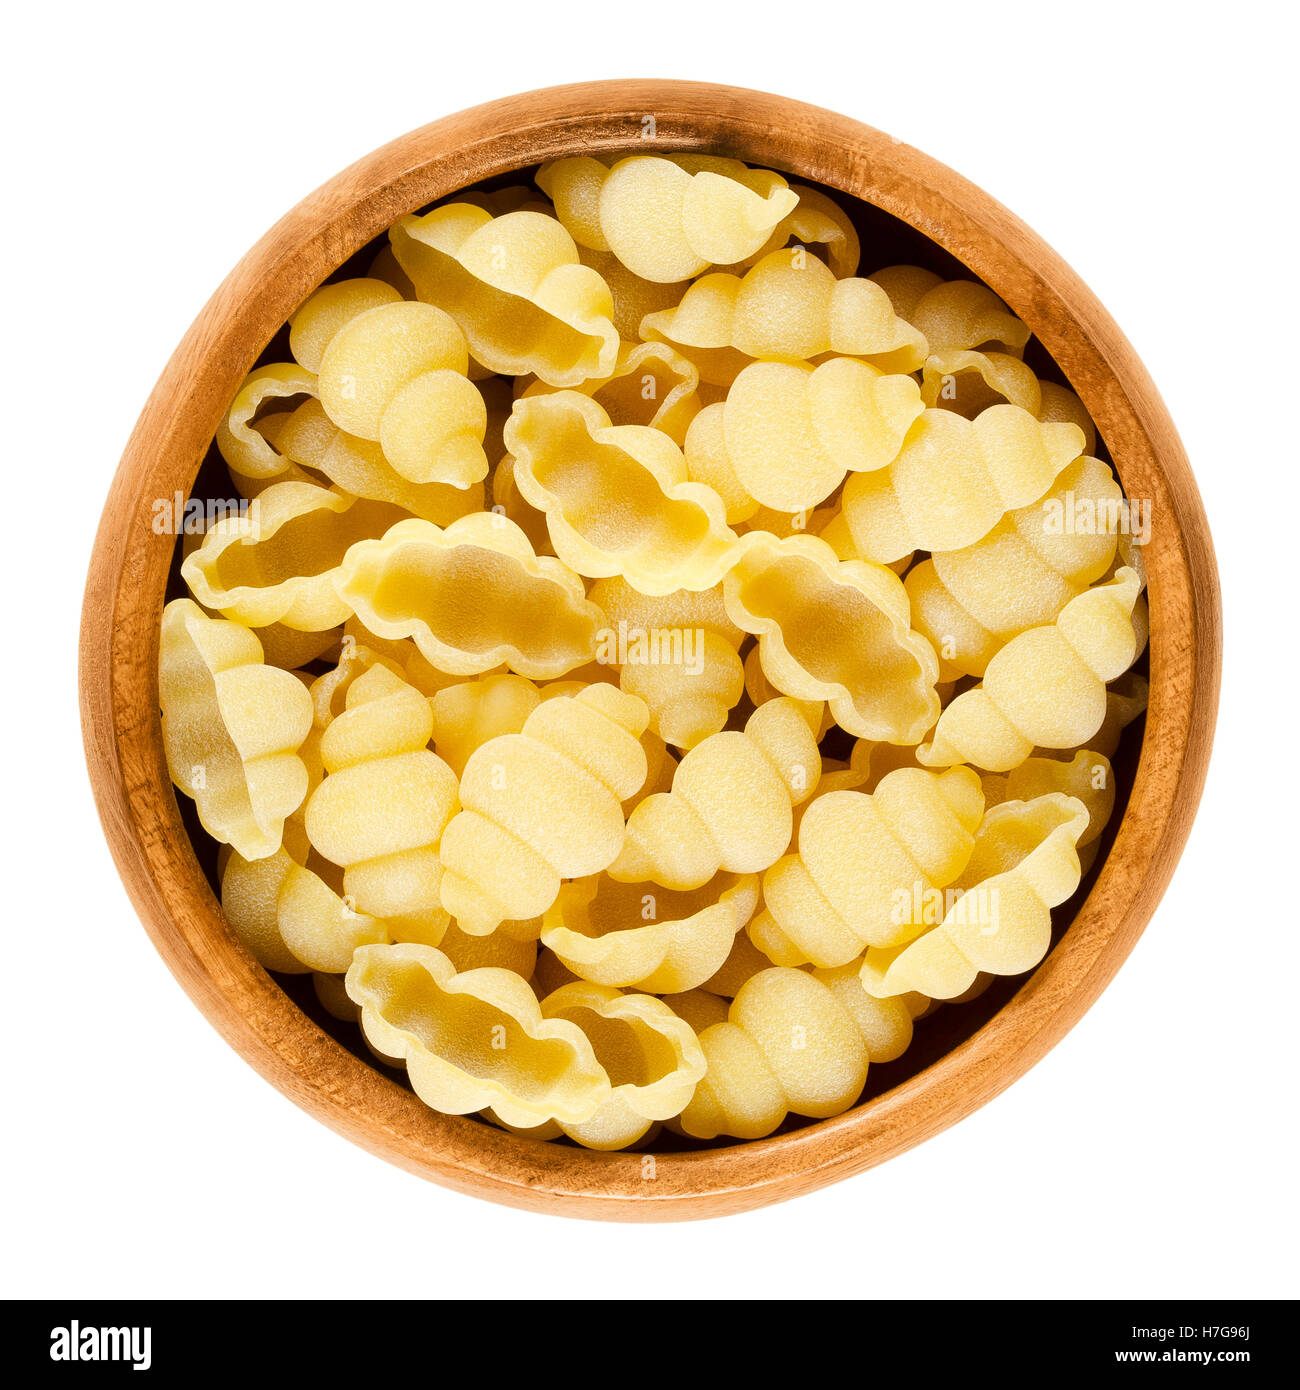 Gnocchi pasta in wooden bowl. Decorative short-cut lobed shells of Italian noodles. Uncooked dried durum wheat semolina pasta. Stock Photo